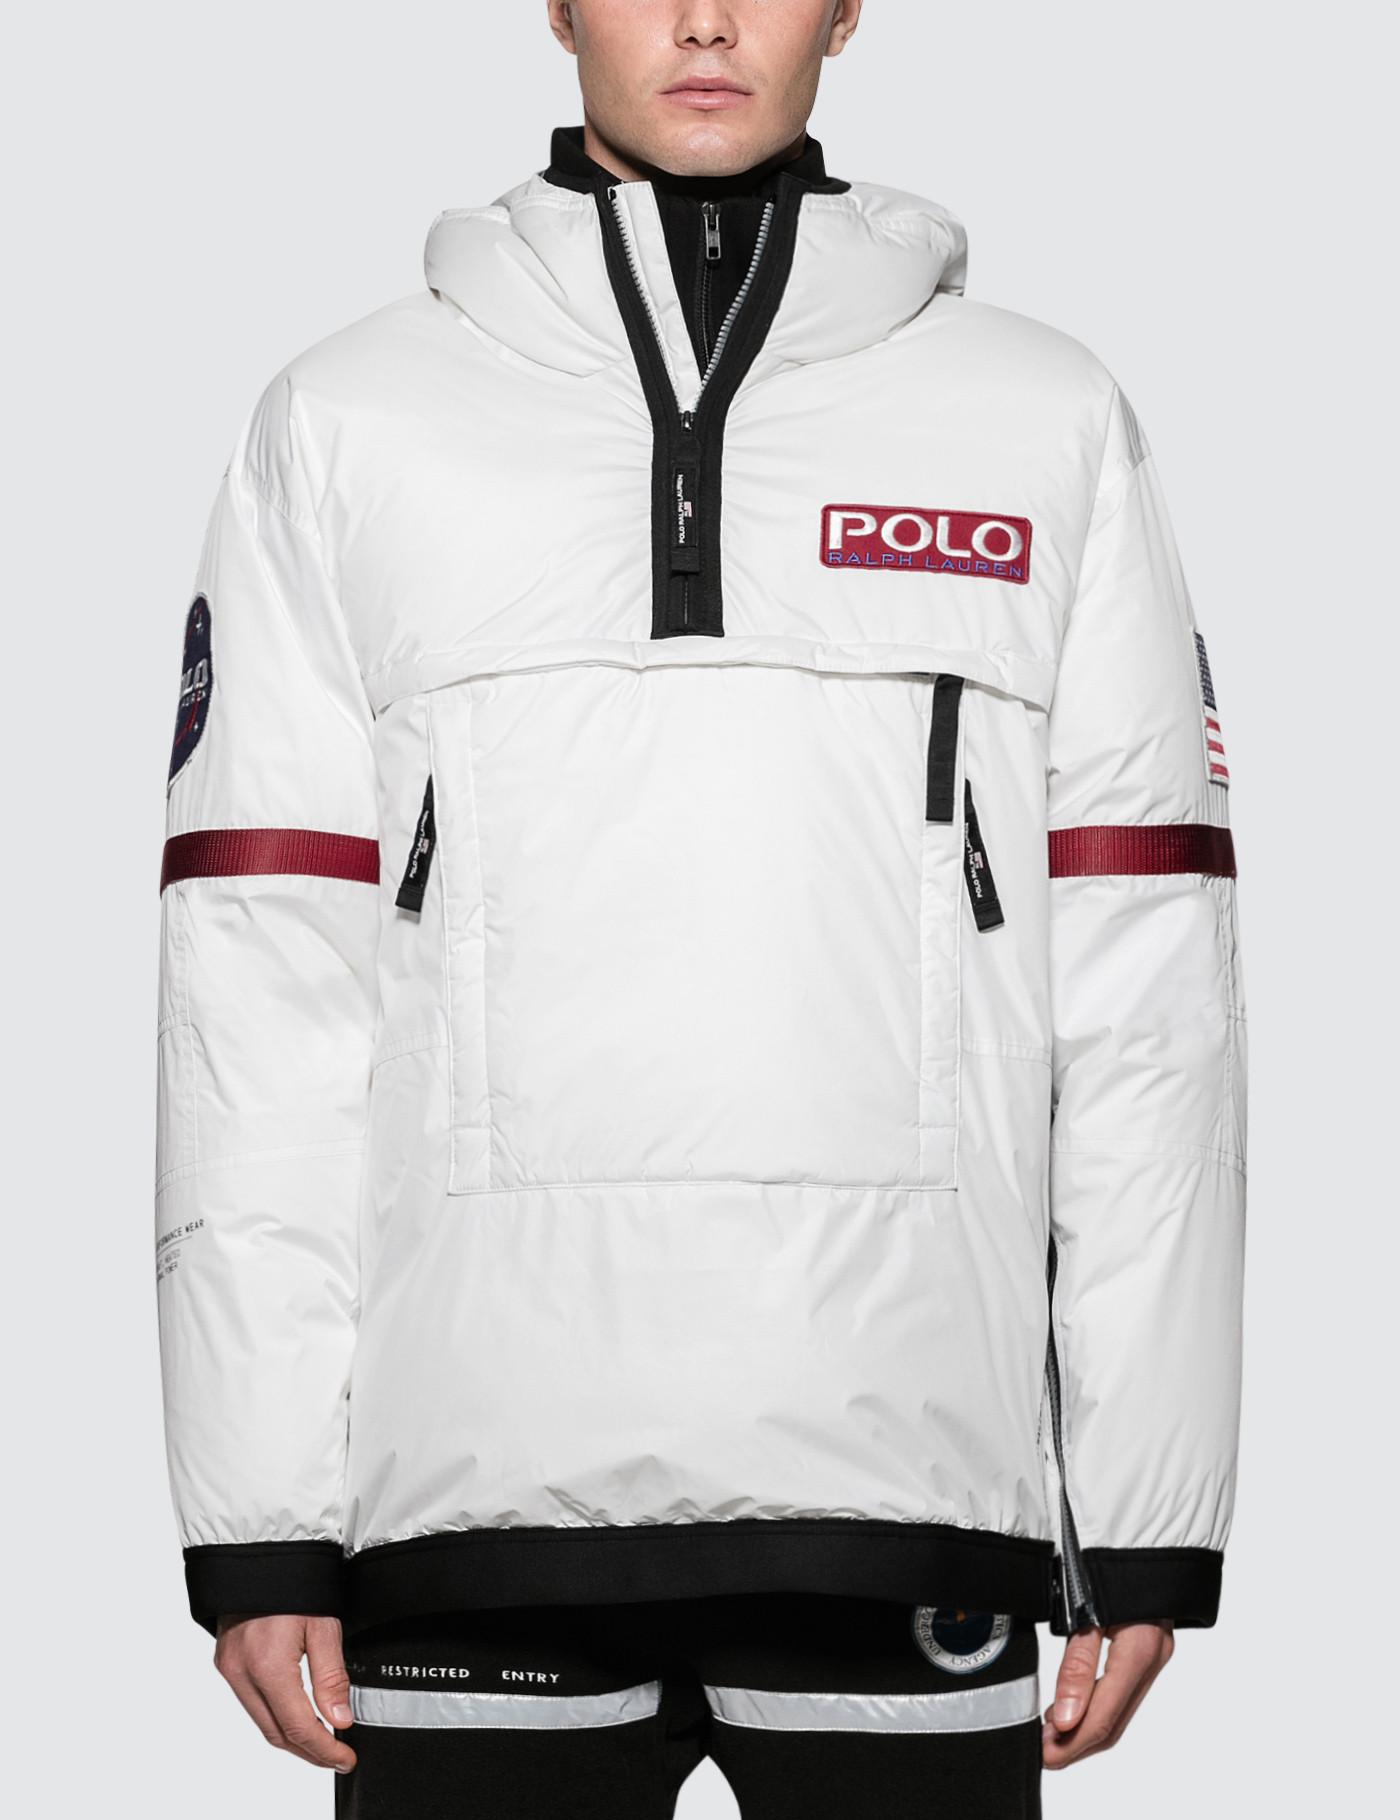 polo 11 heated jacket